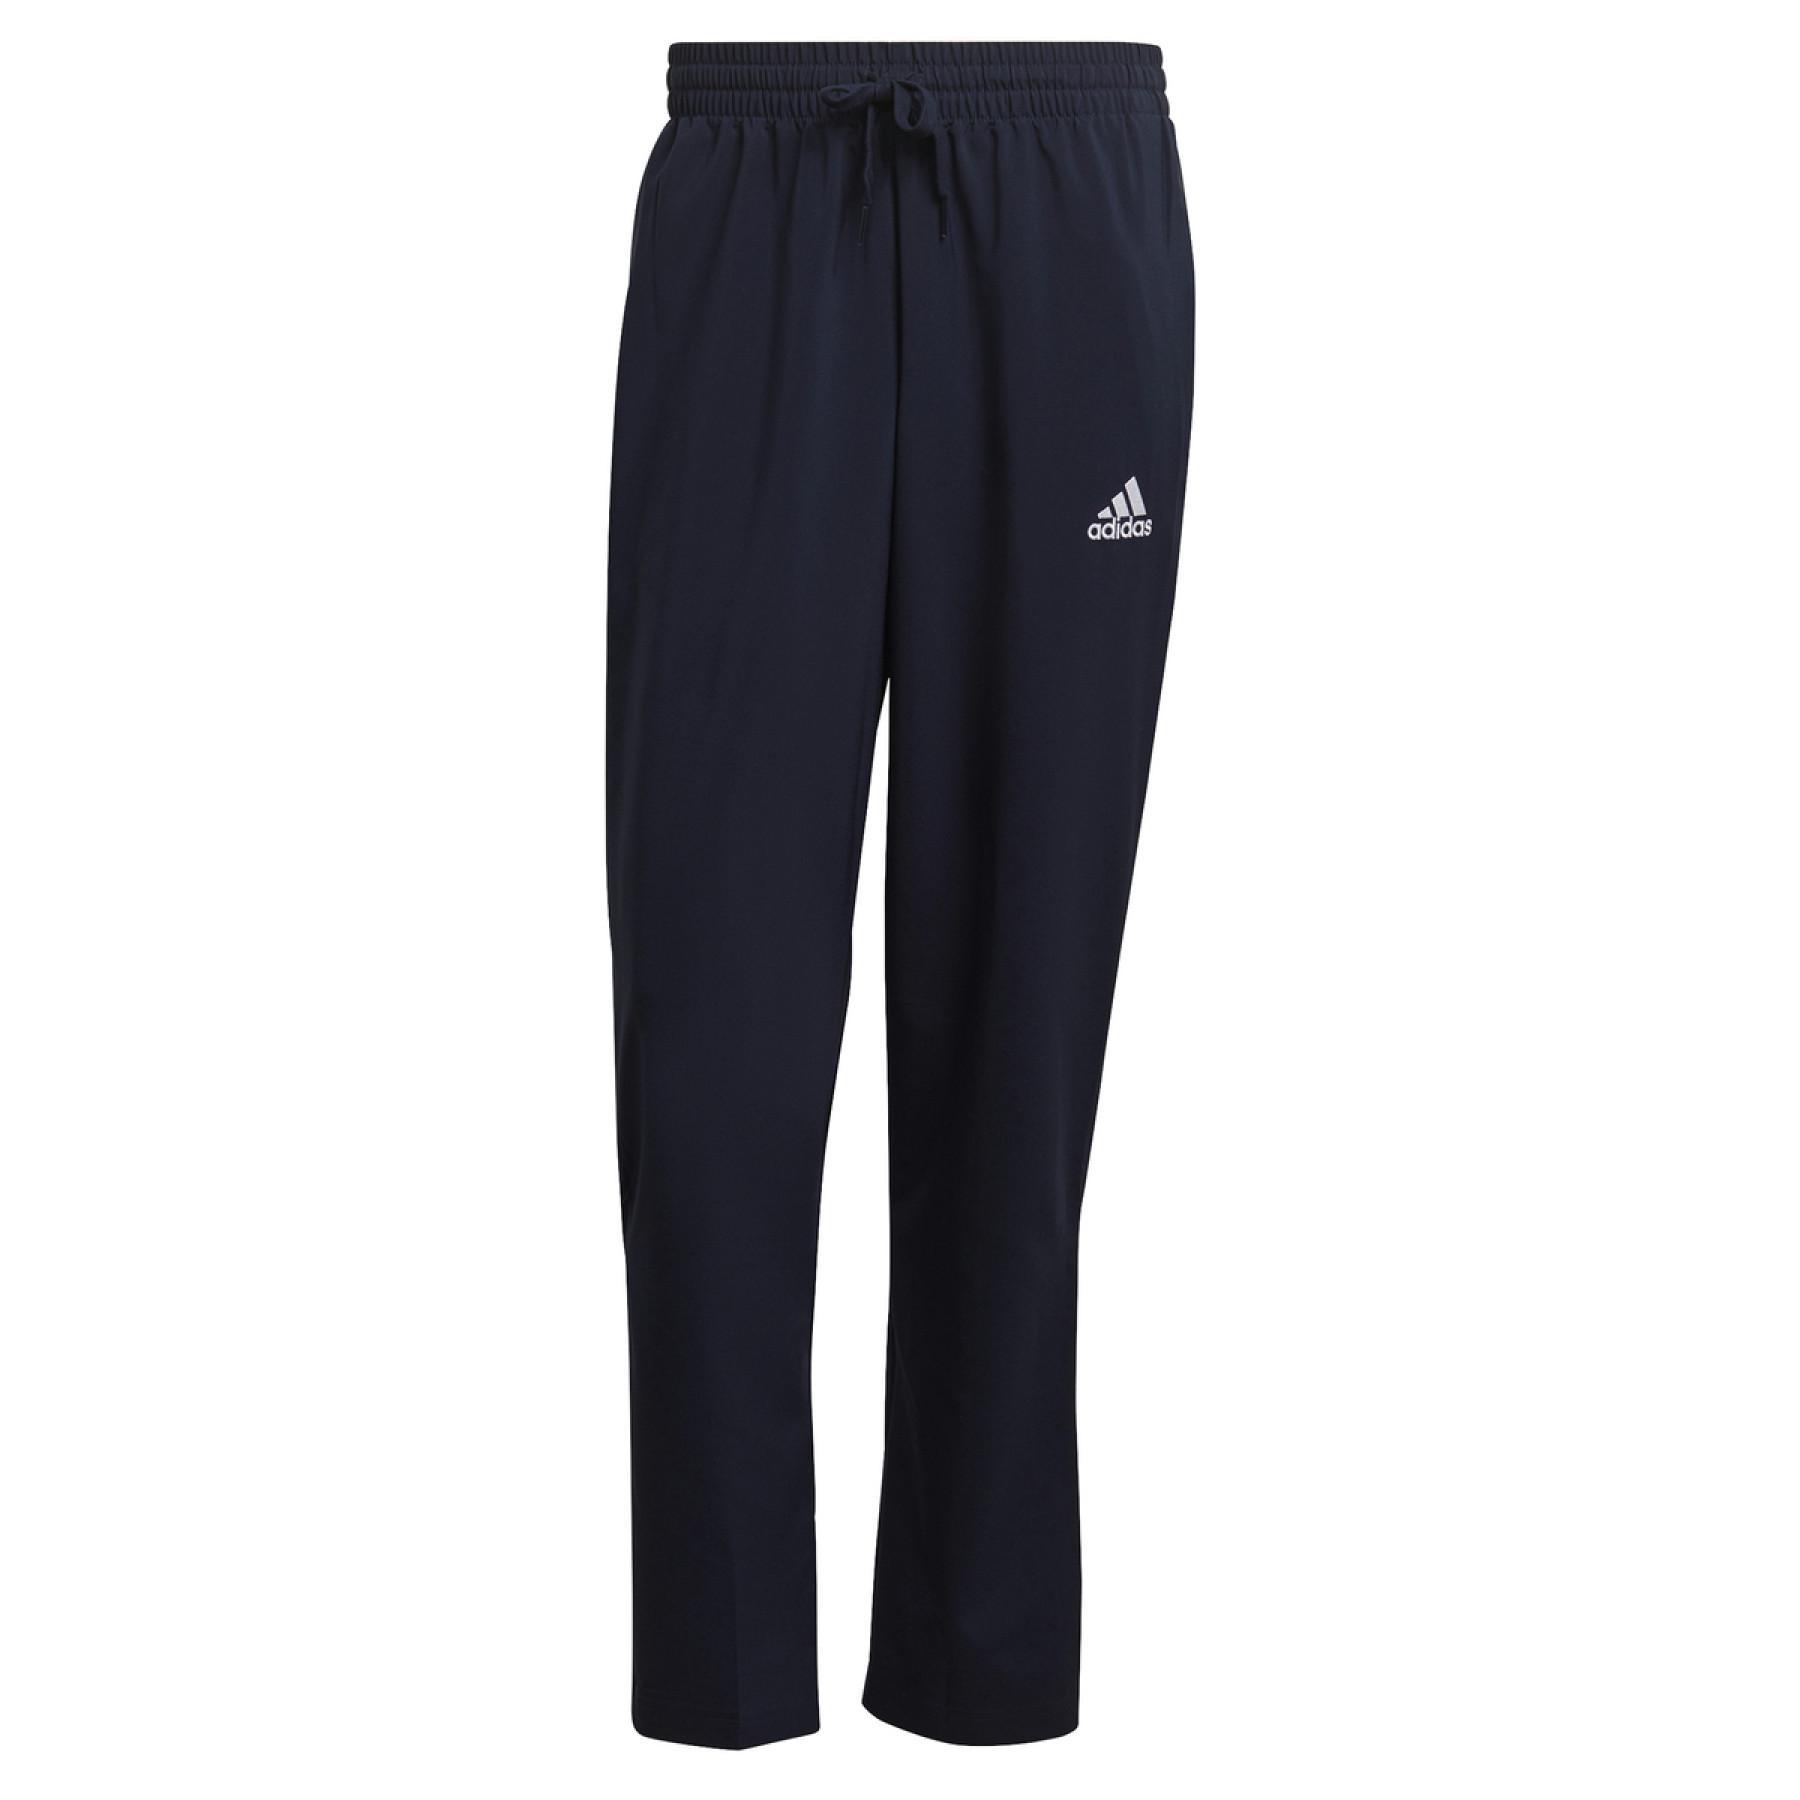 rivaal klei Corroderen Pants adidas Aeroready Essentials Stanford - adidas - Brands - Handball wear